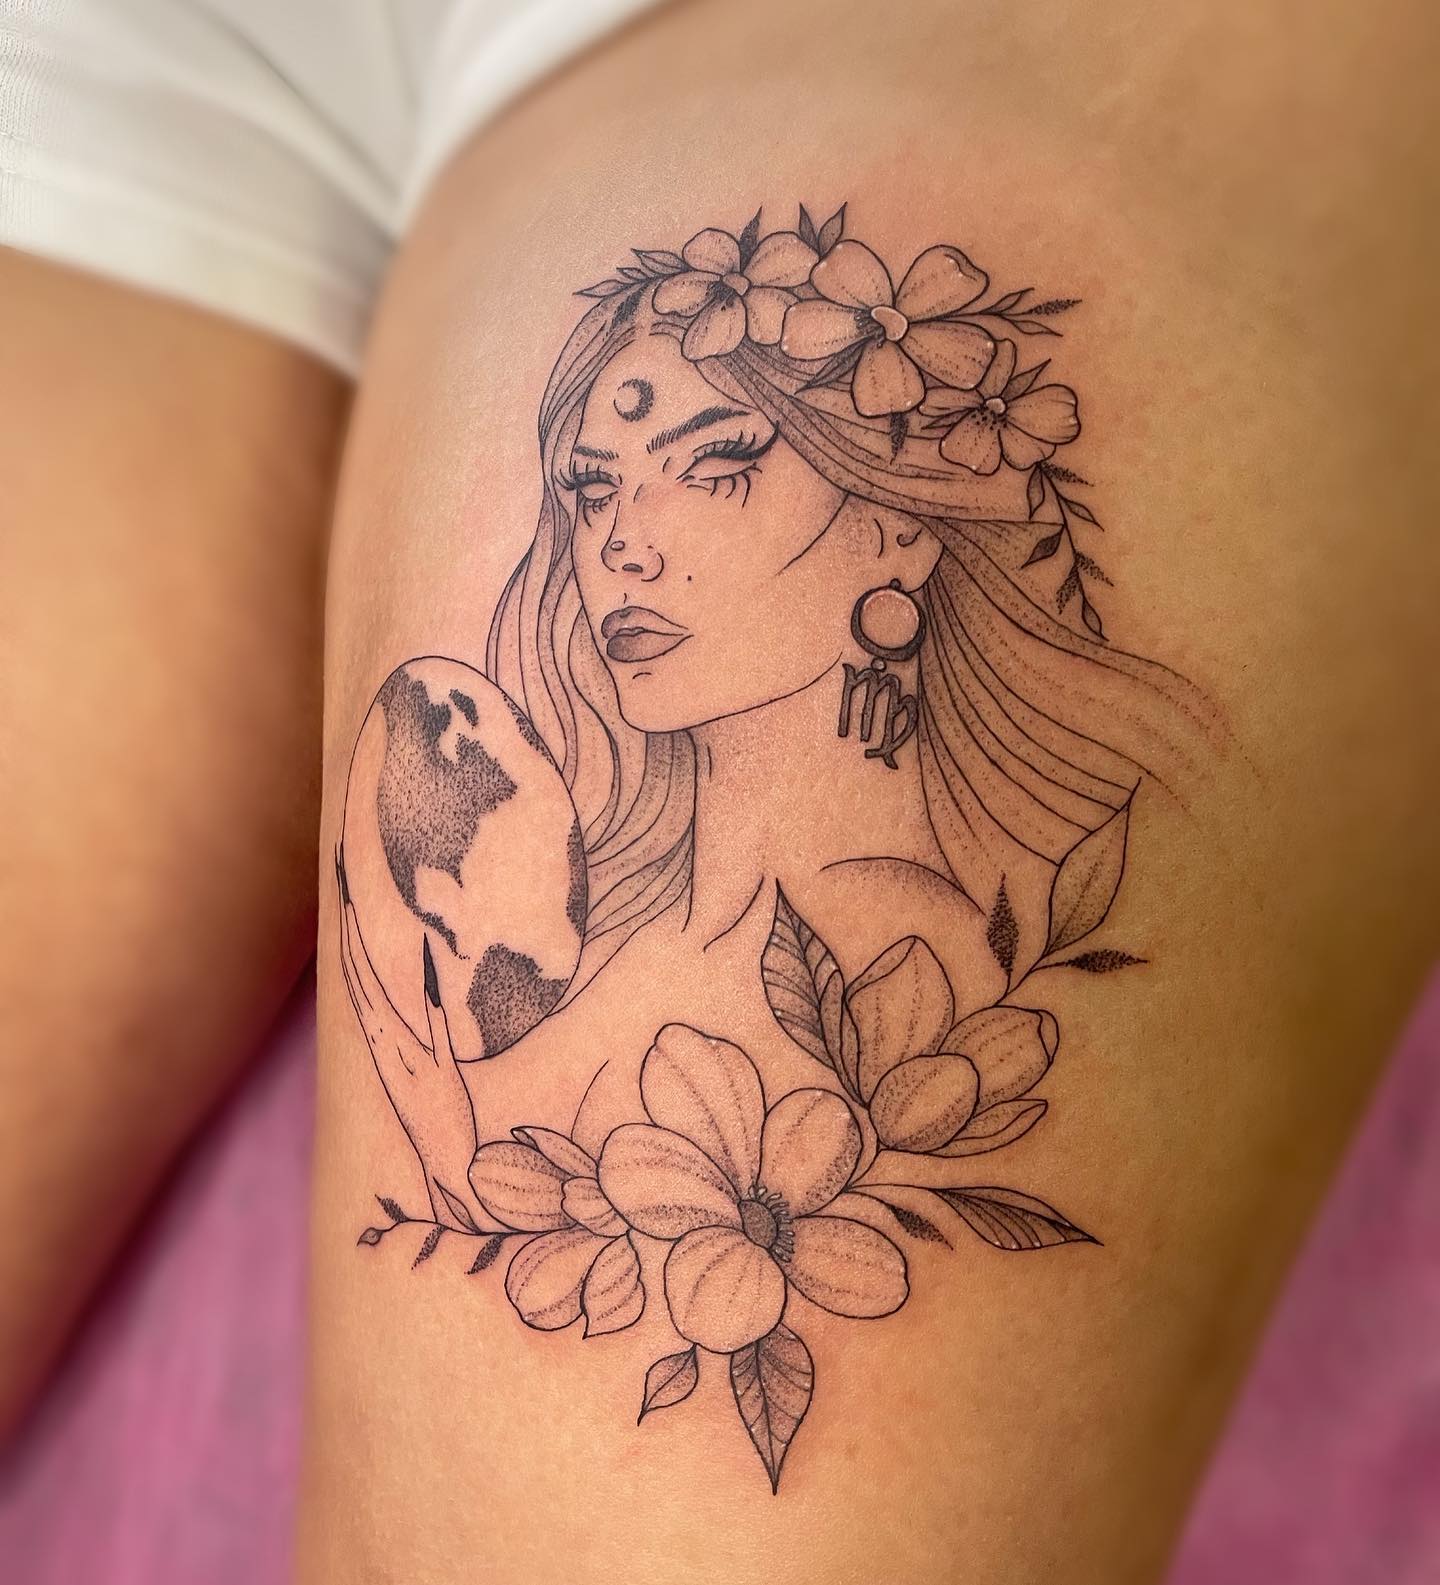 Virgo goddess tattoo on the thigh